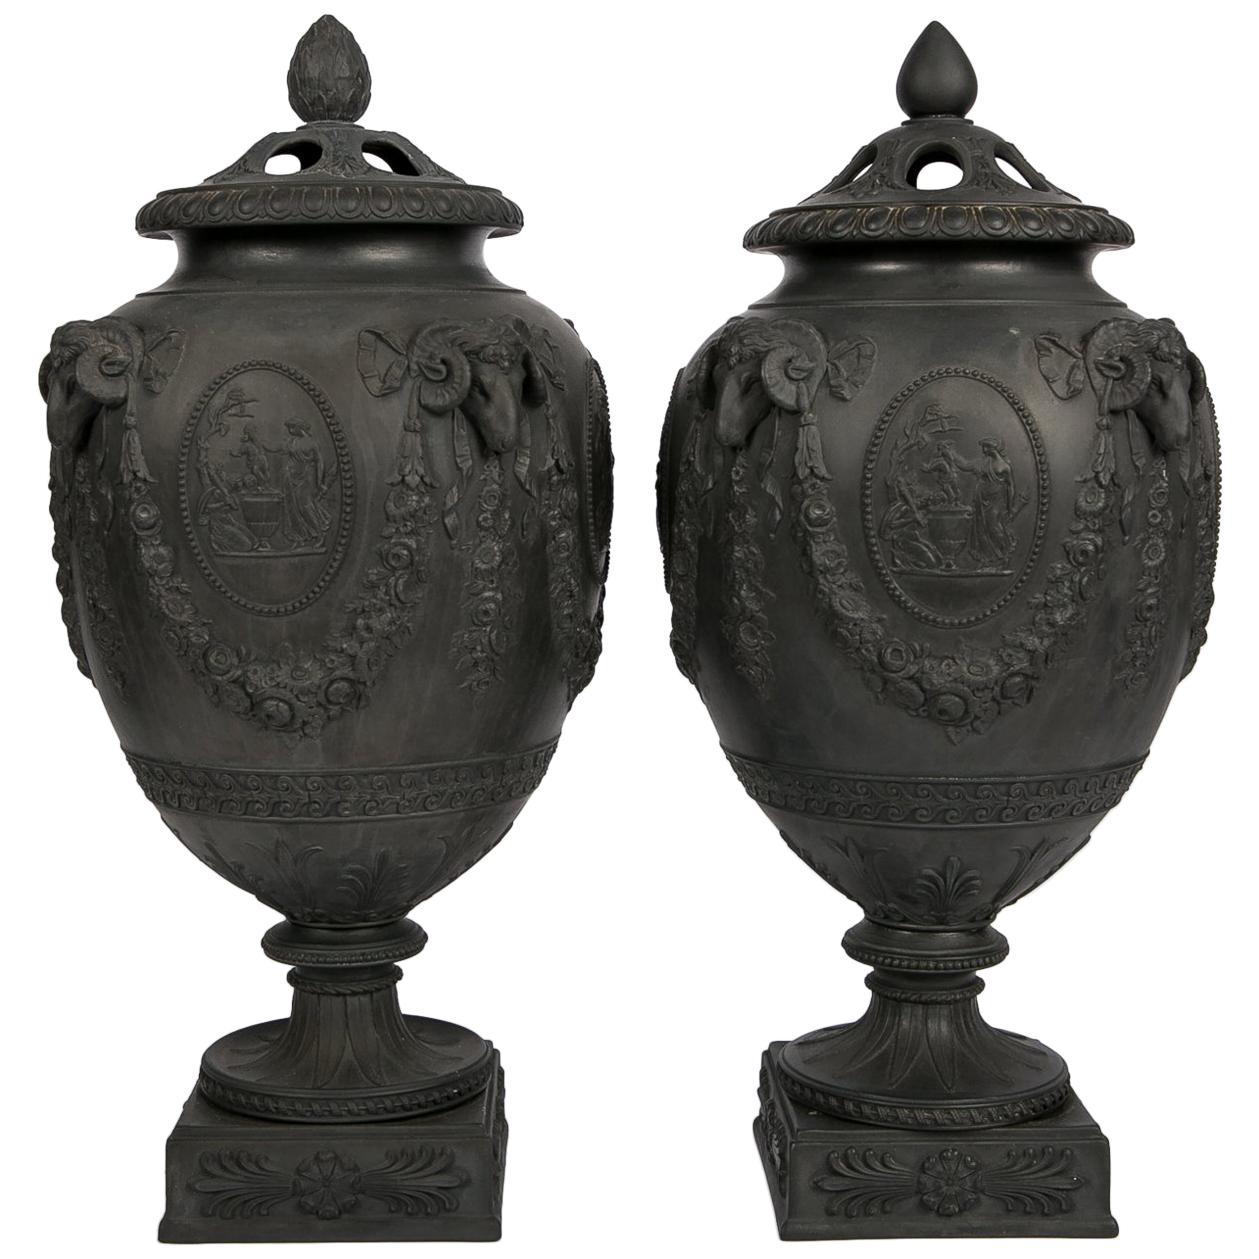 Pair of Wedgwood Black Basalt Urns Made in England circa 1820